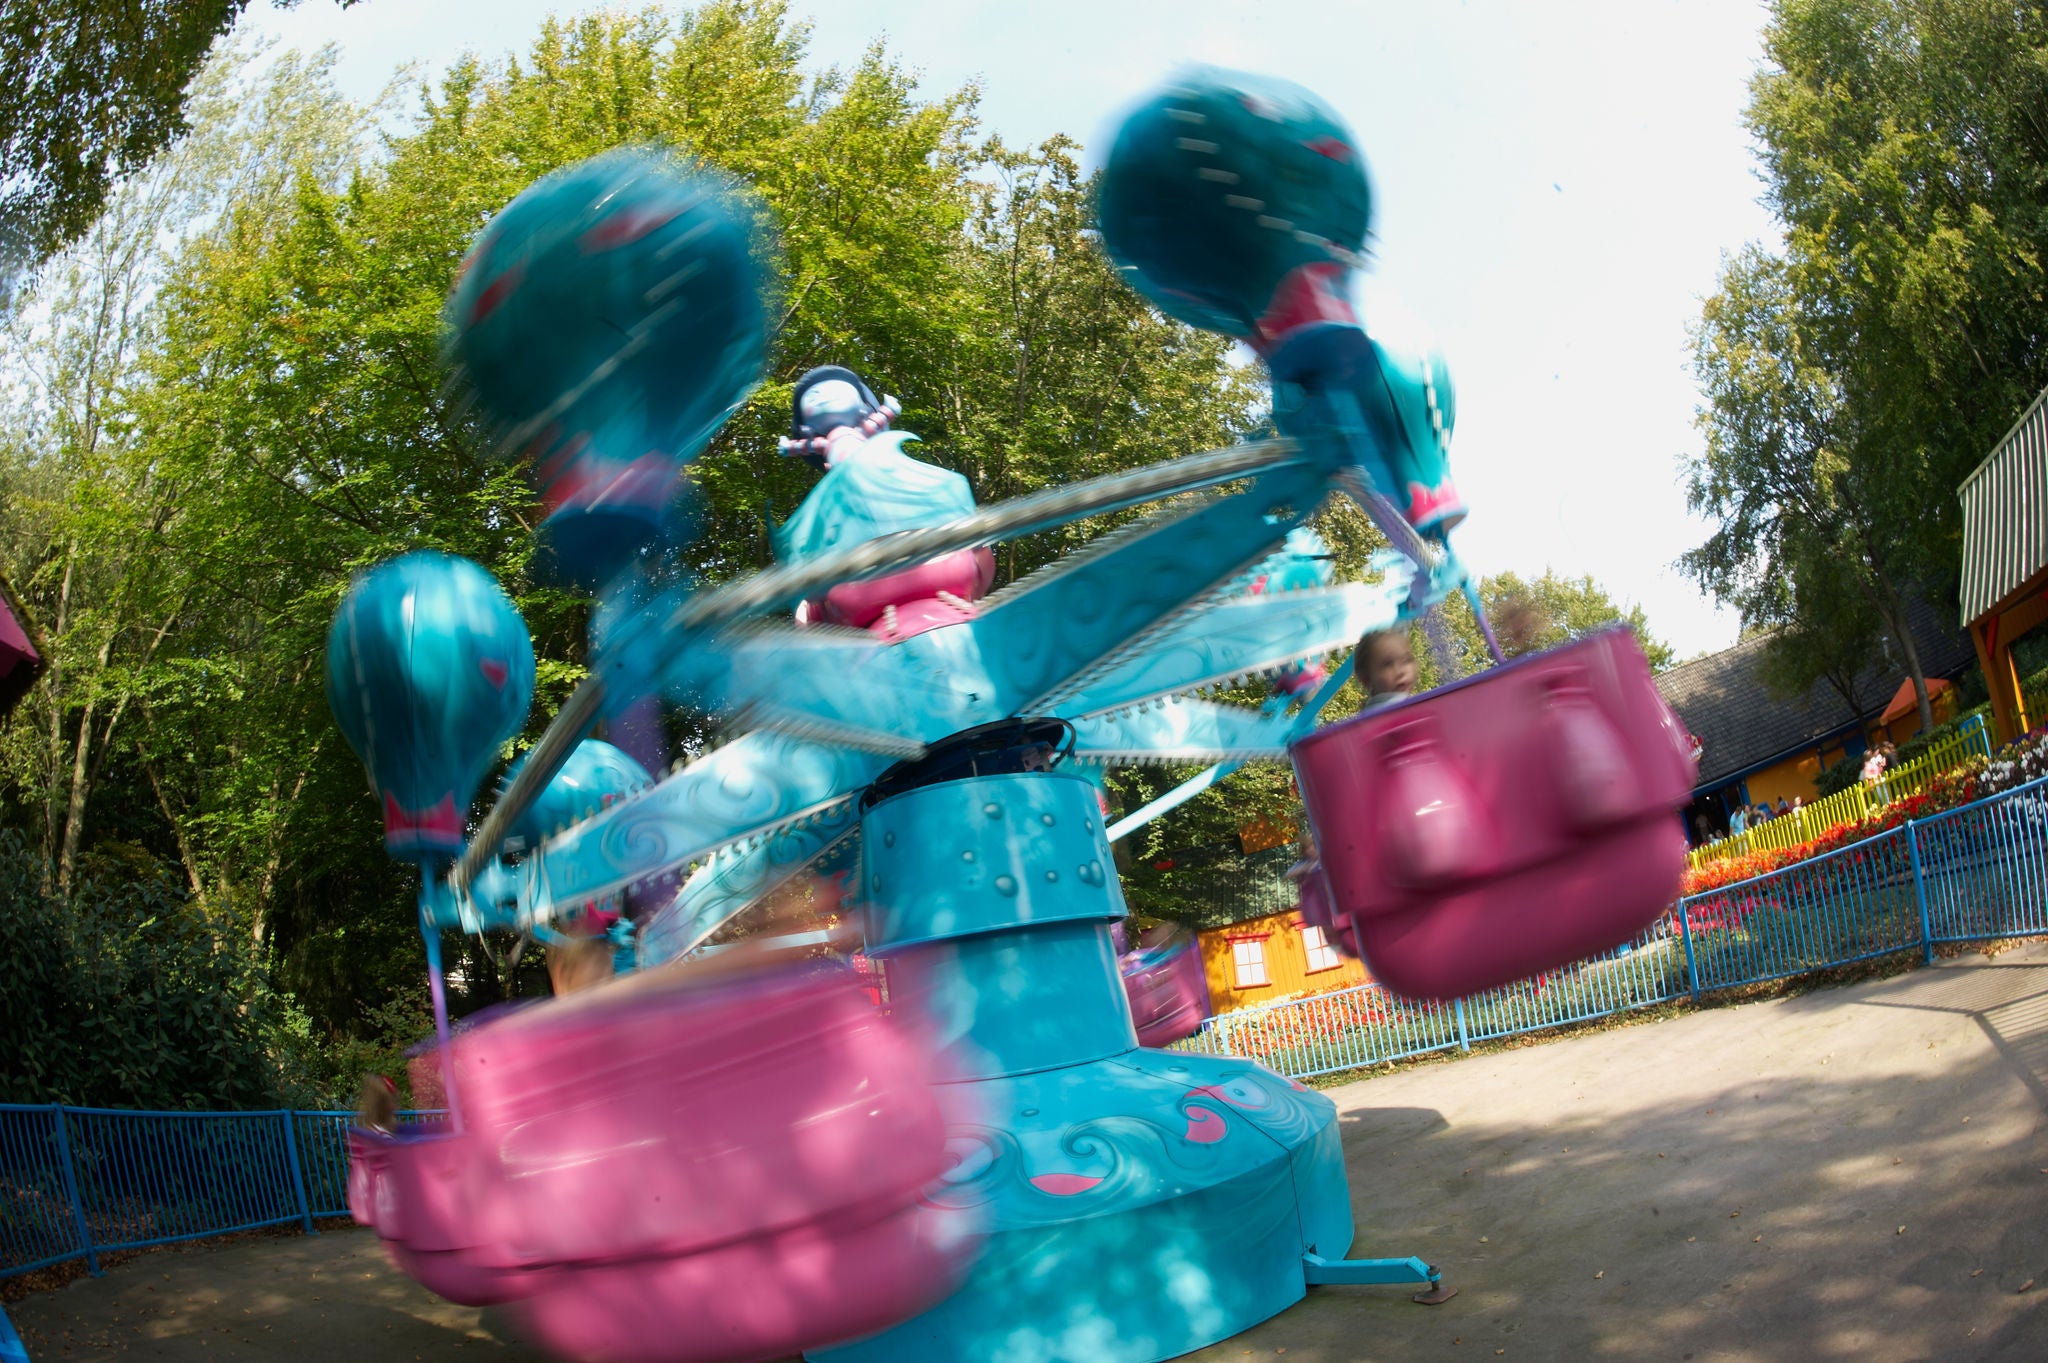 Take a ride in the hot air balloon in Fibi's Bubble Swirl. 